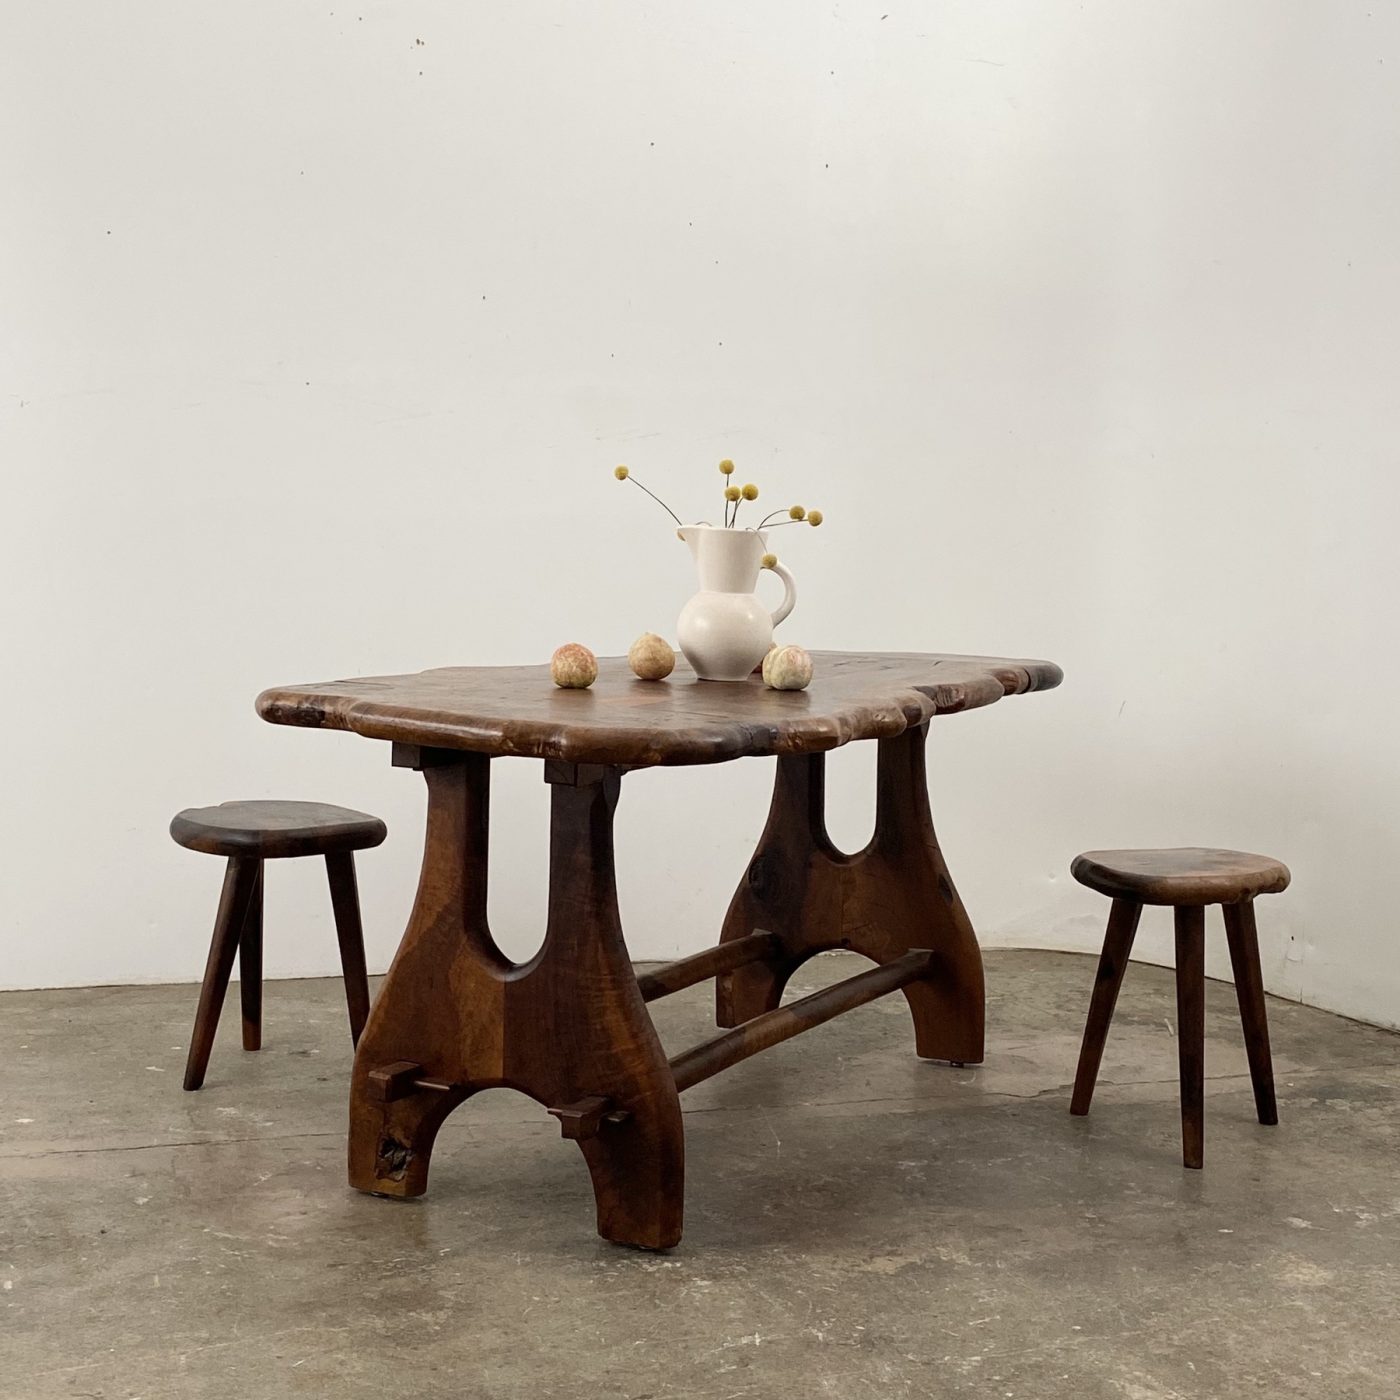 objet-vagabond-olive-table0002